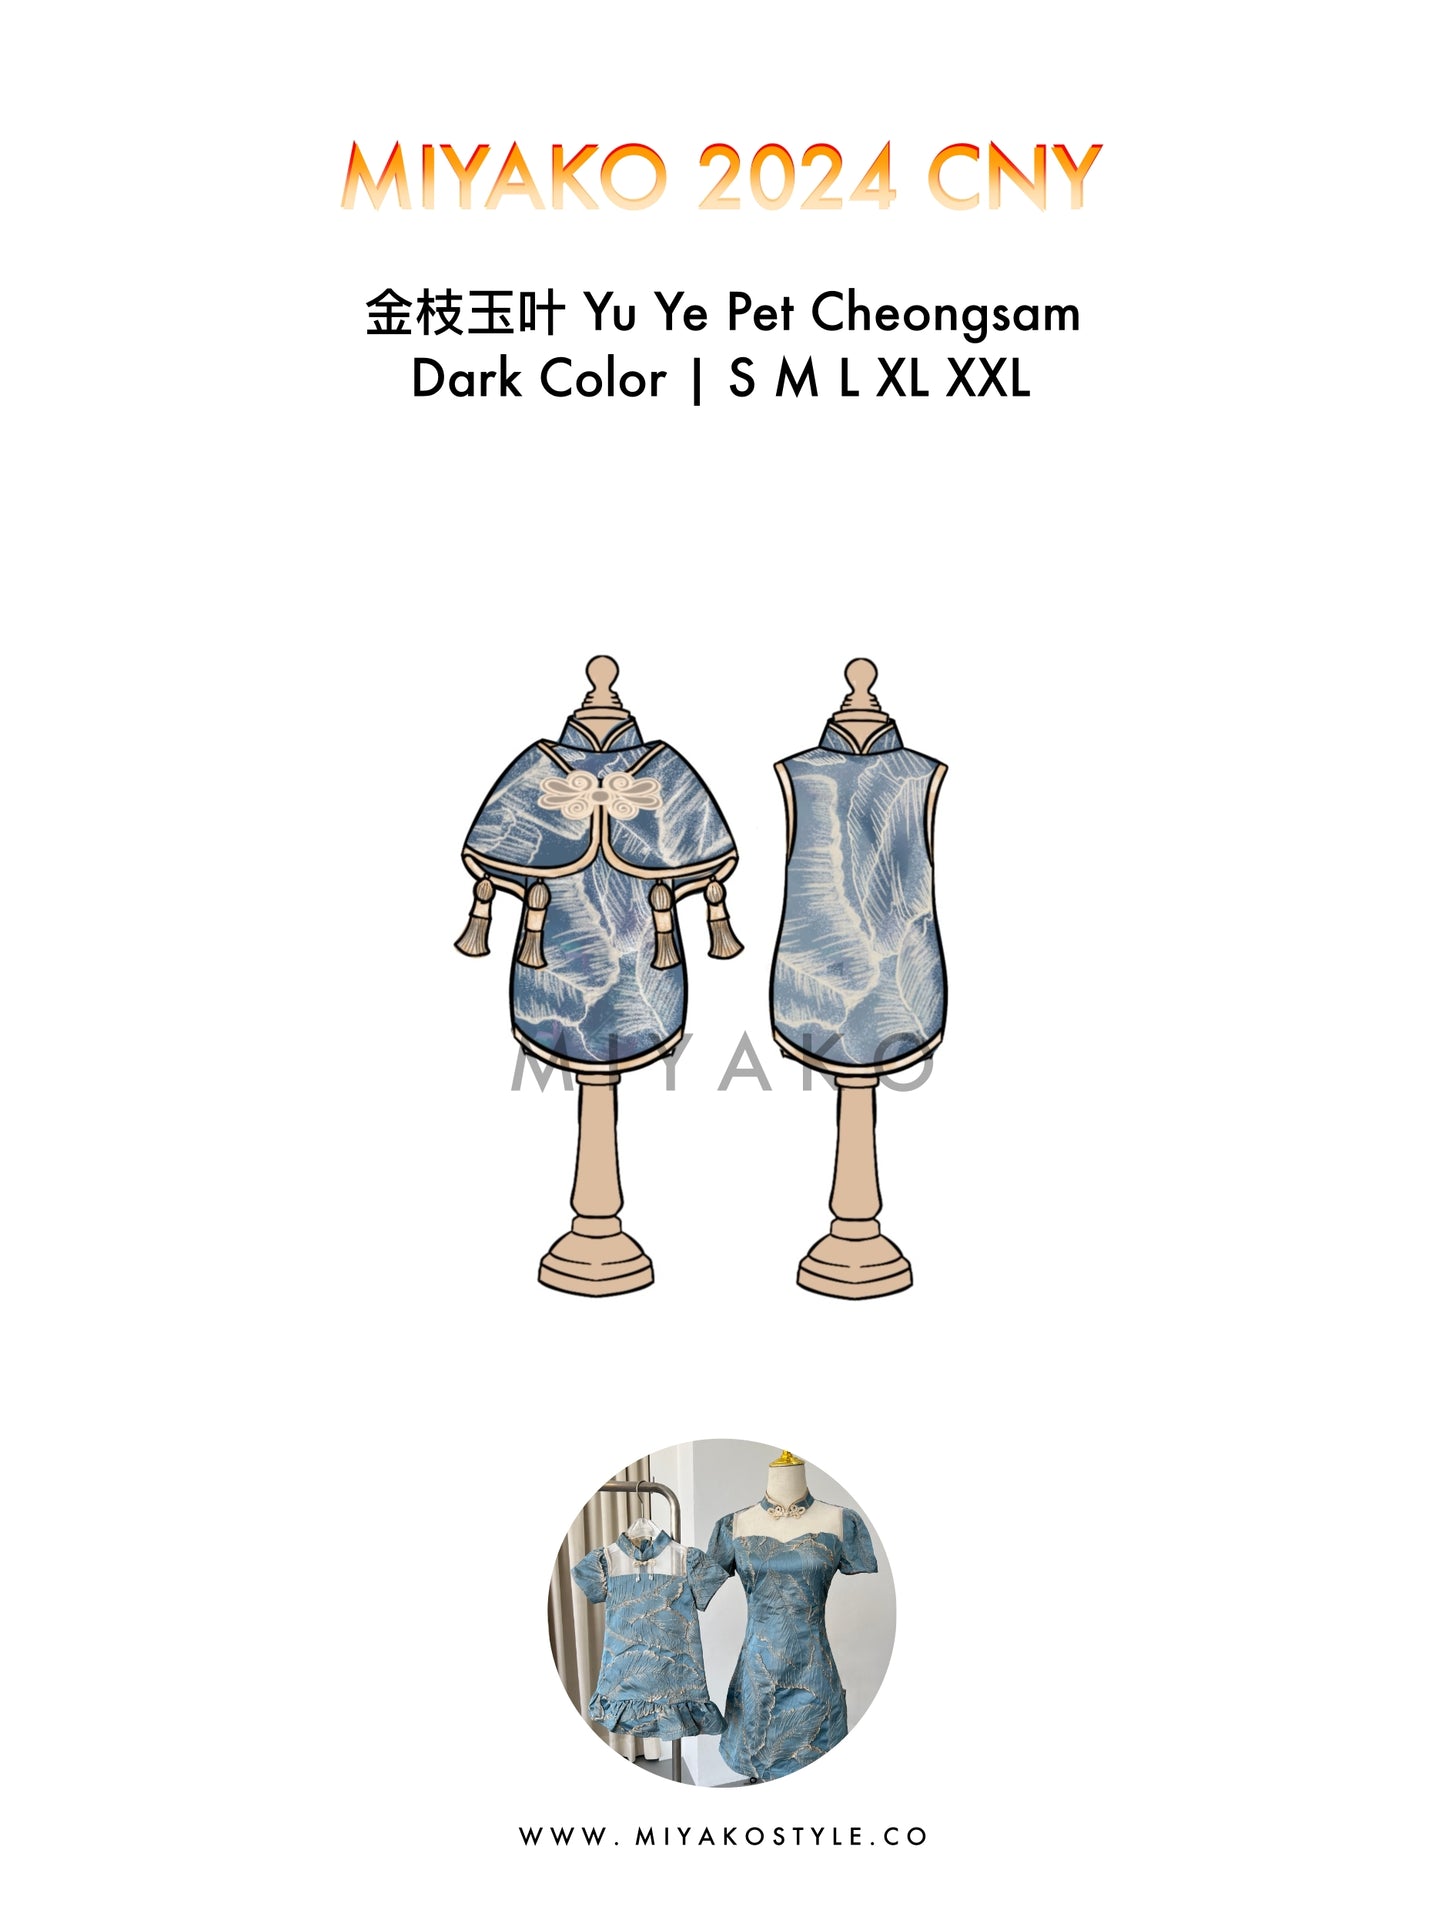 【金枝玉葉】 Yu Ye Premium Cheongsam in Light Colour (Pets) 淺色寵物款